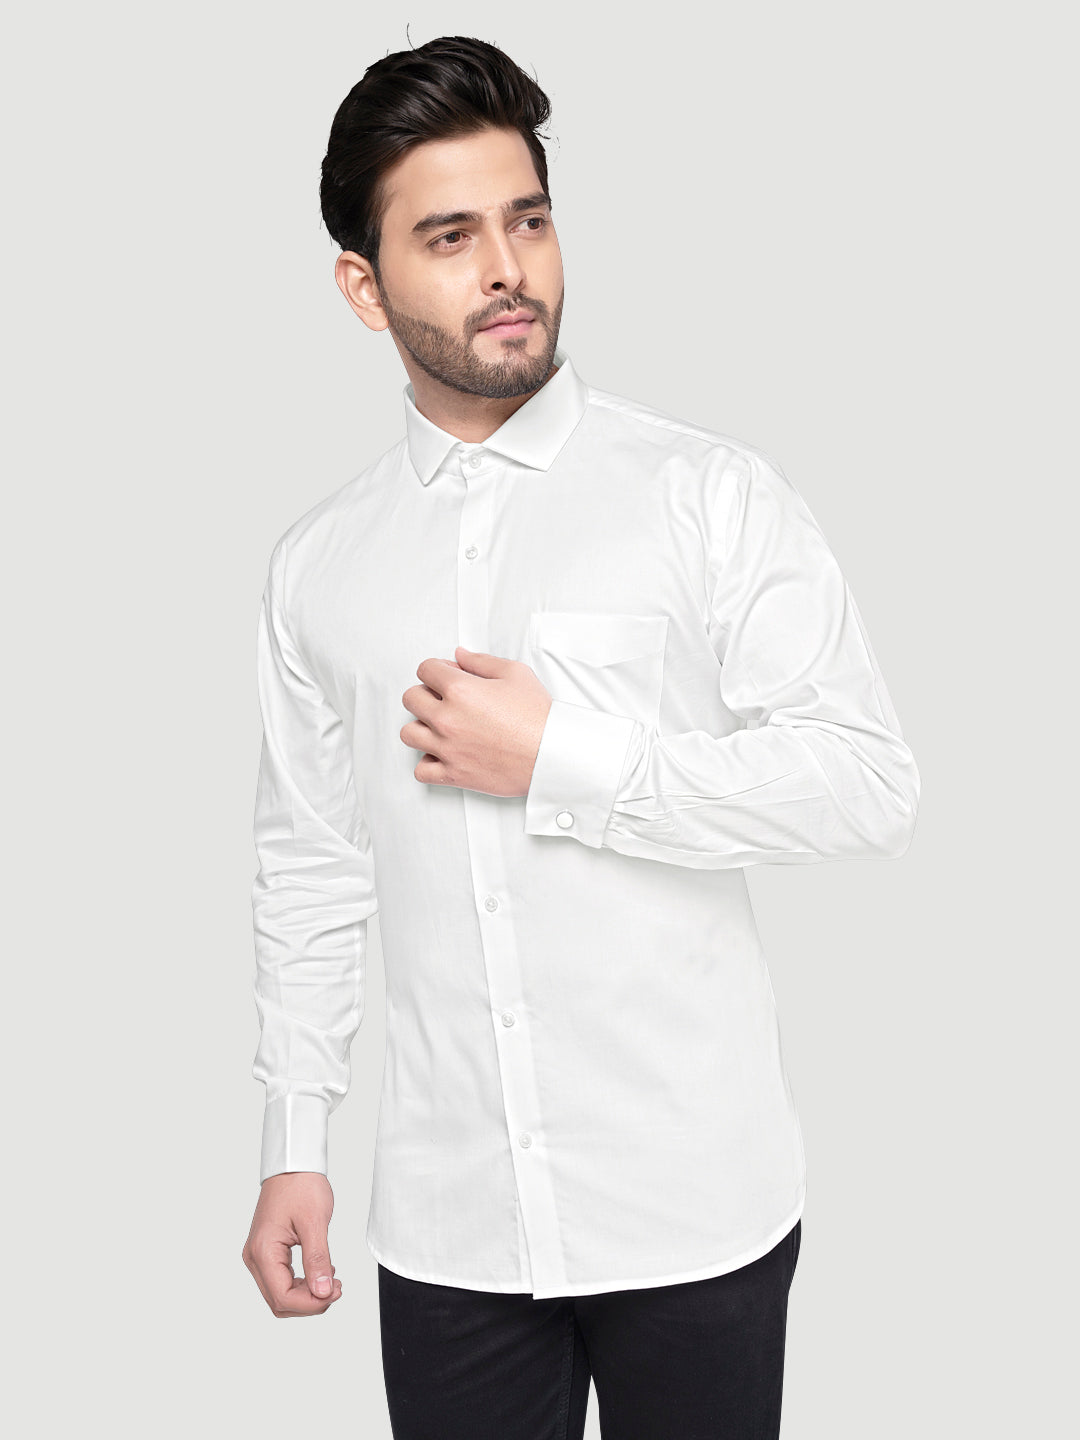 Black & White Men's Formal Cufflink Shirt White-Premium-White